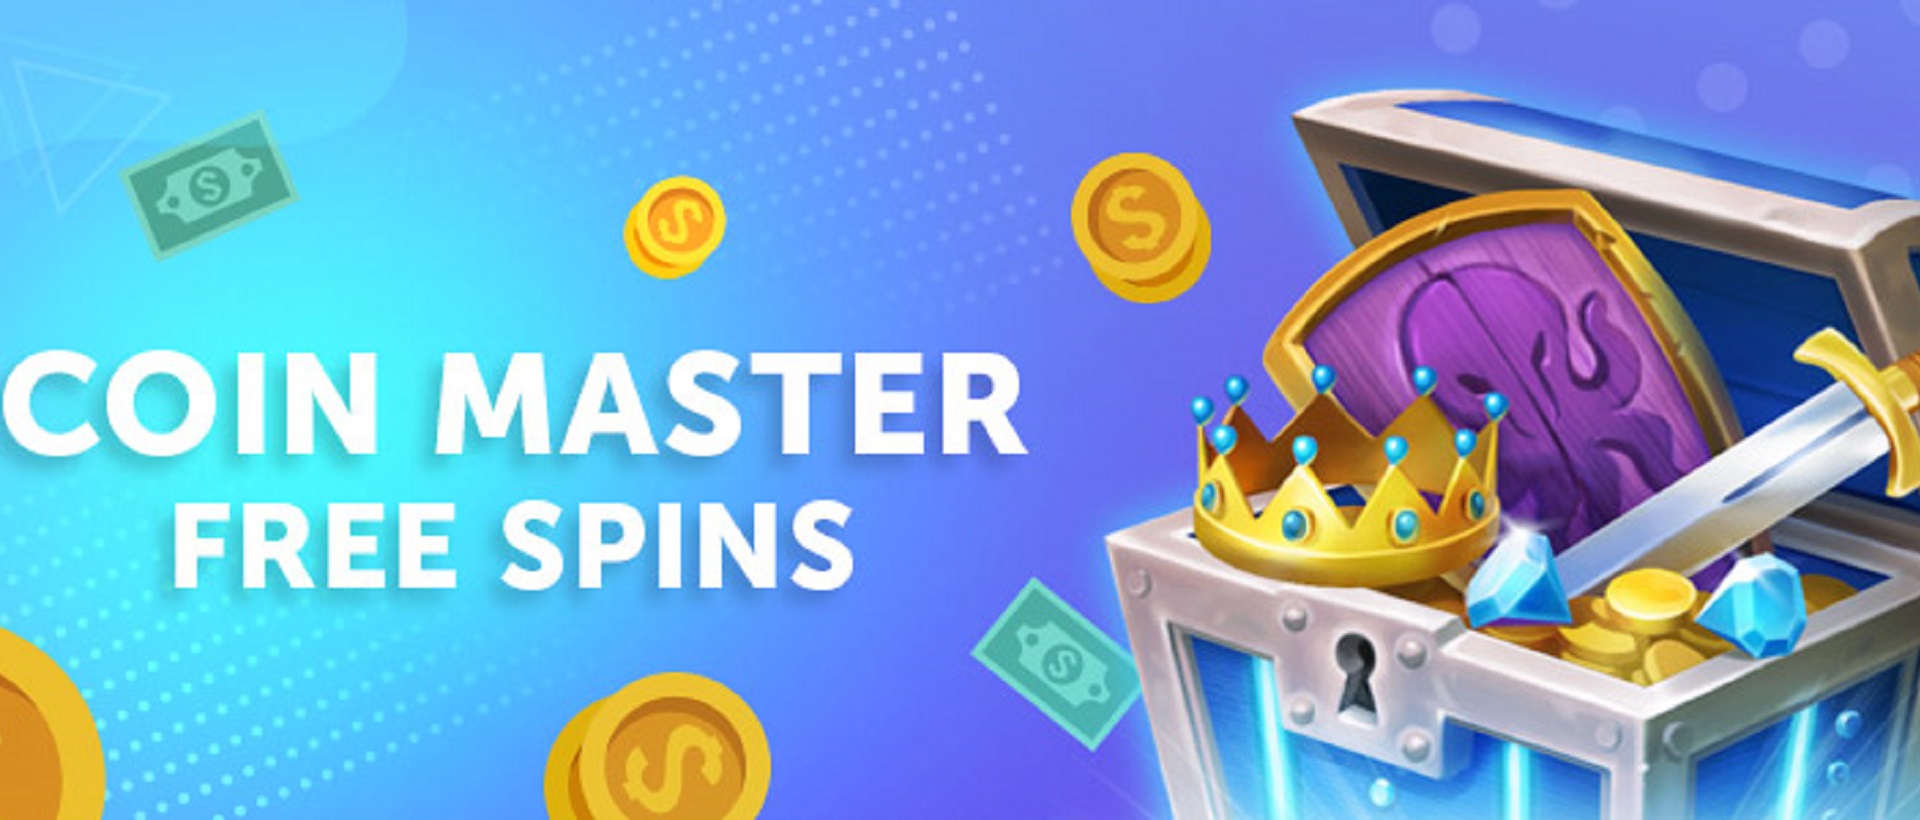 Razor tricks com coin master free spin links 2019